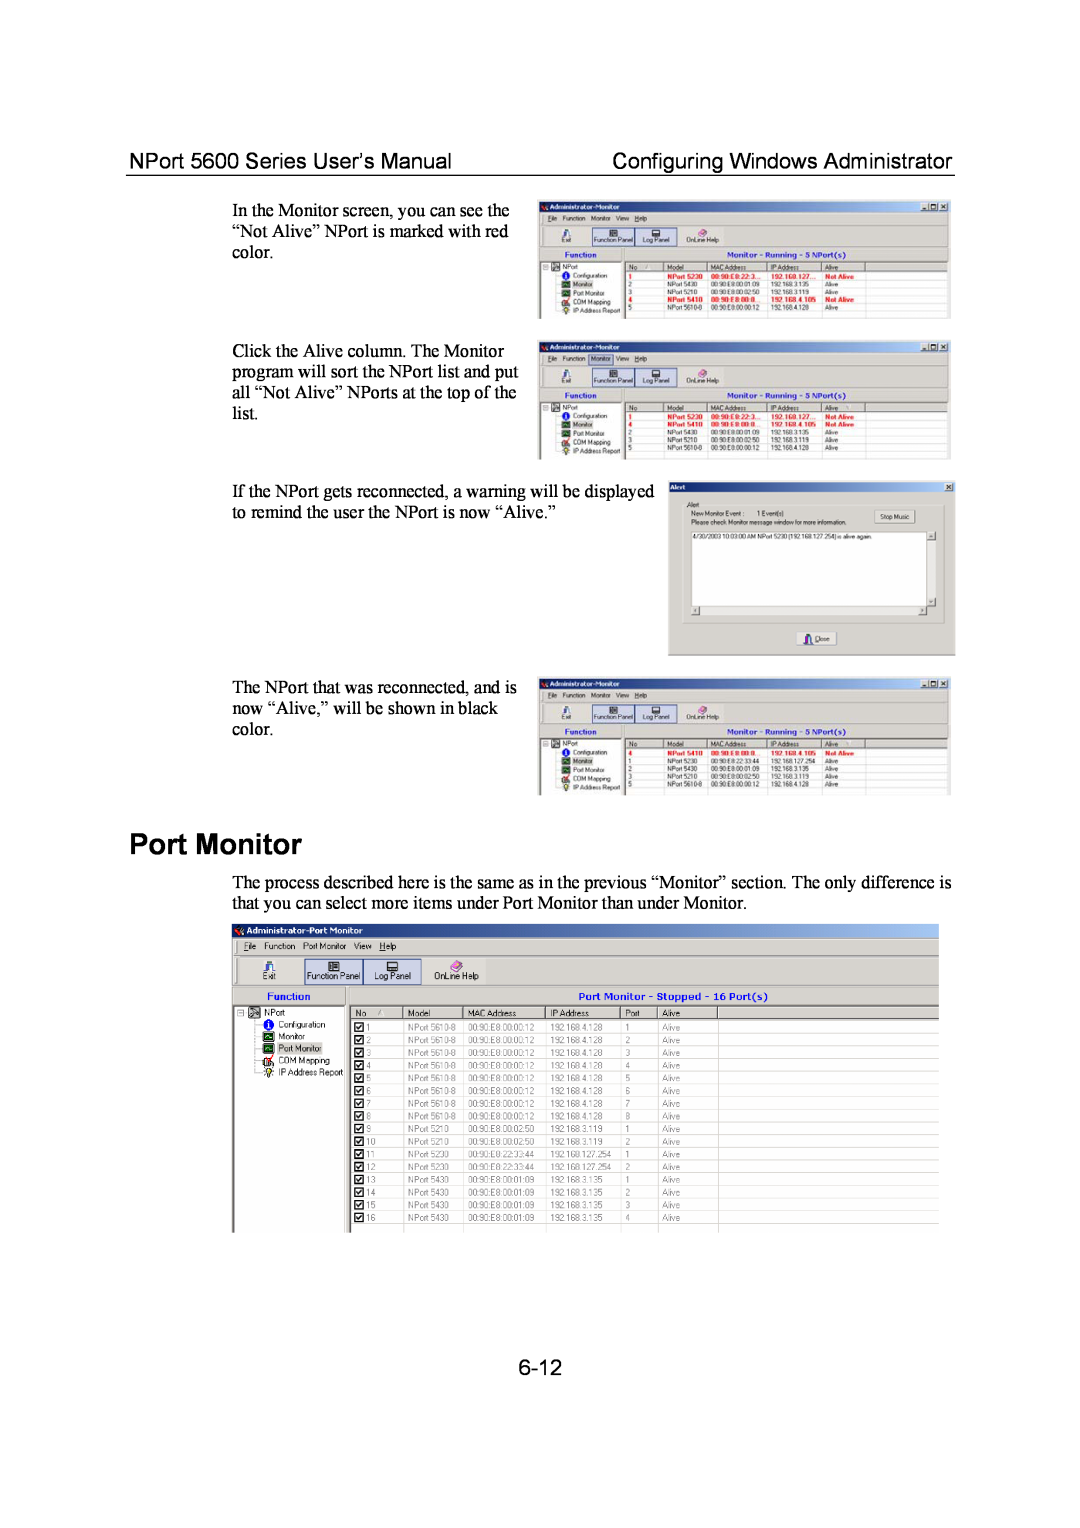 Moxa Technologies user manual Port Monitor, 6-12, NPort 5600 Series User’s Manual, Configuring Windows Administrator 